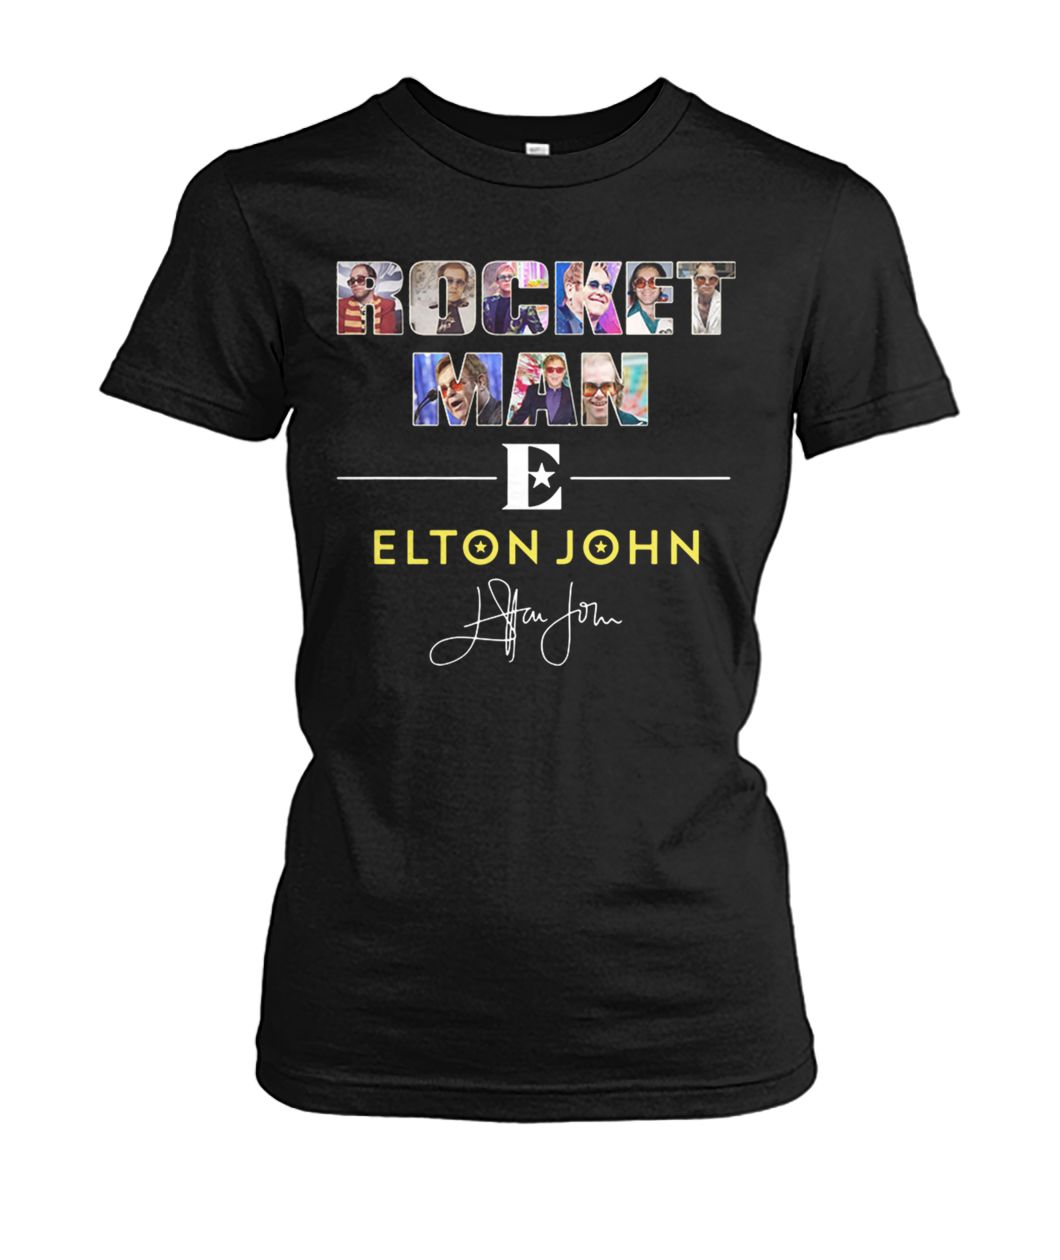 Rocket man elton john signature women's crew tee